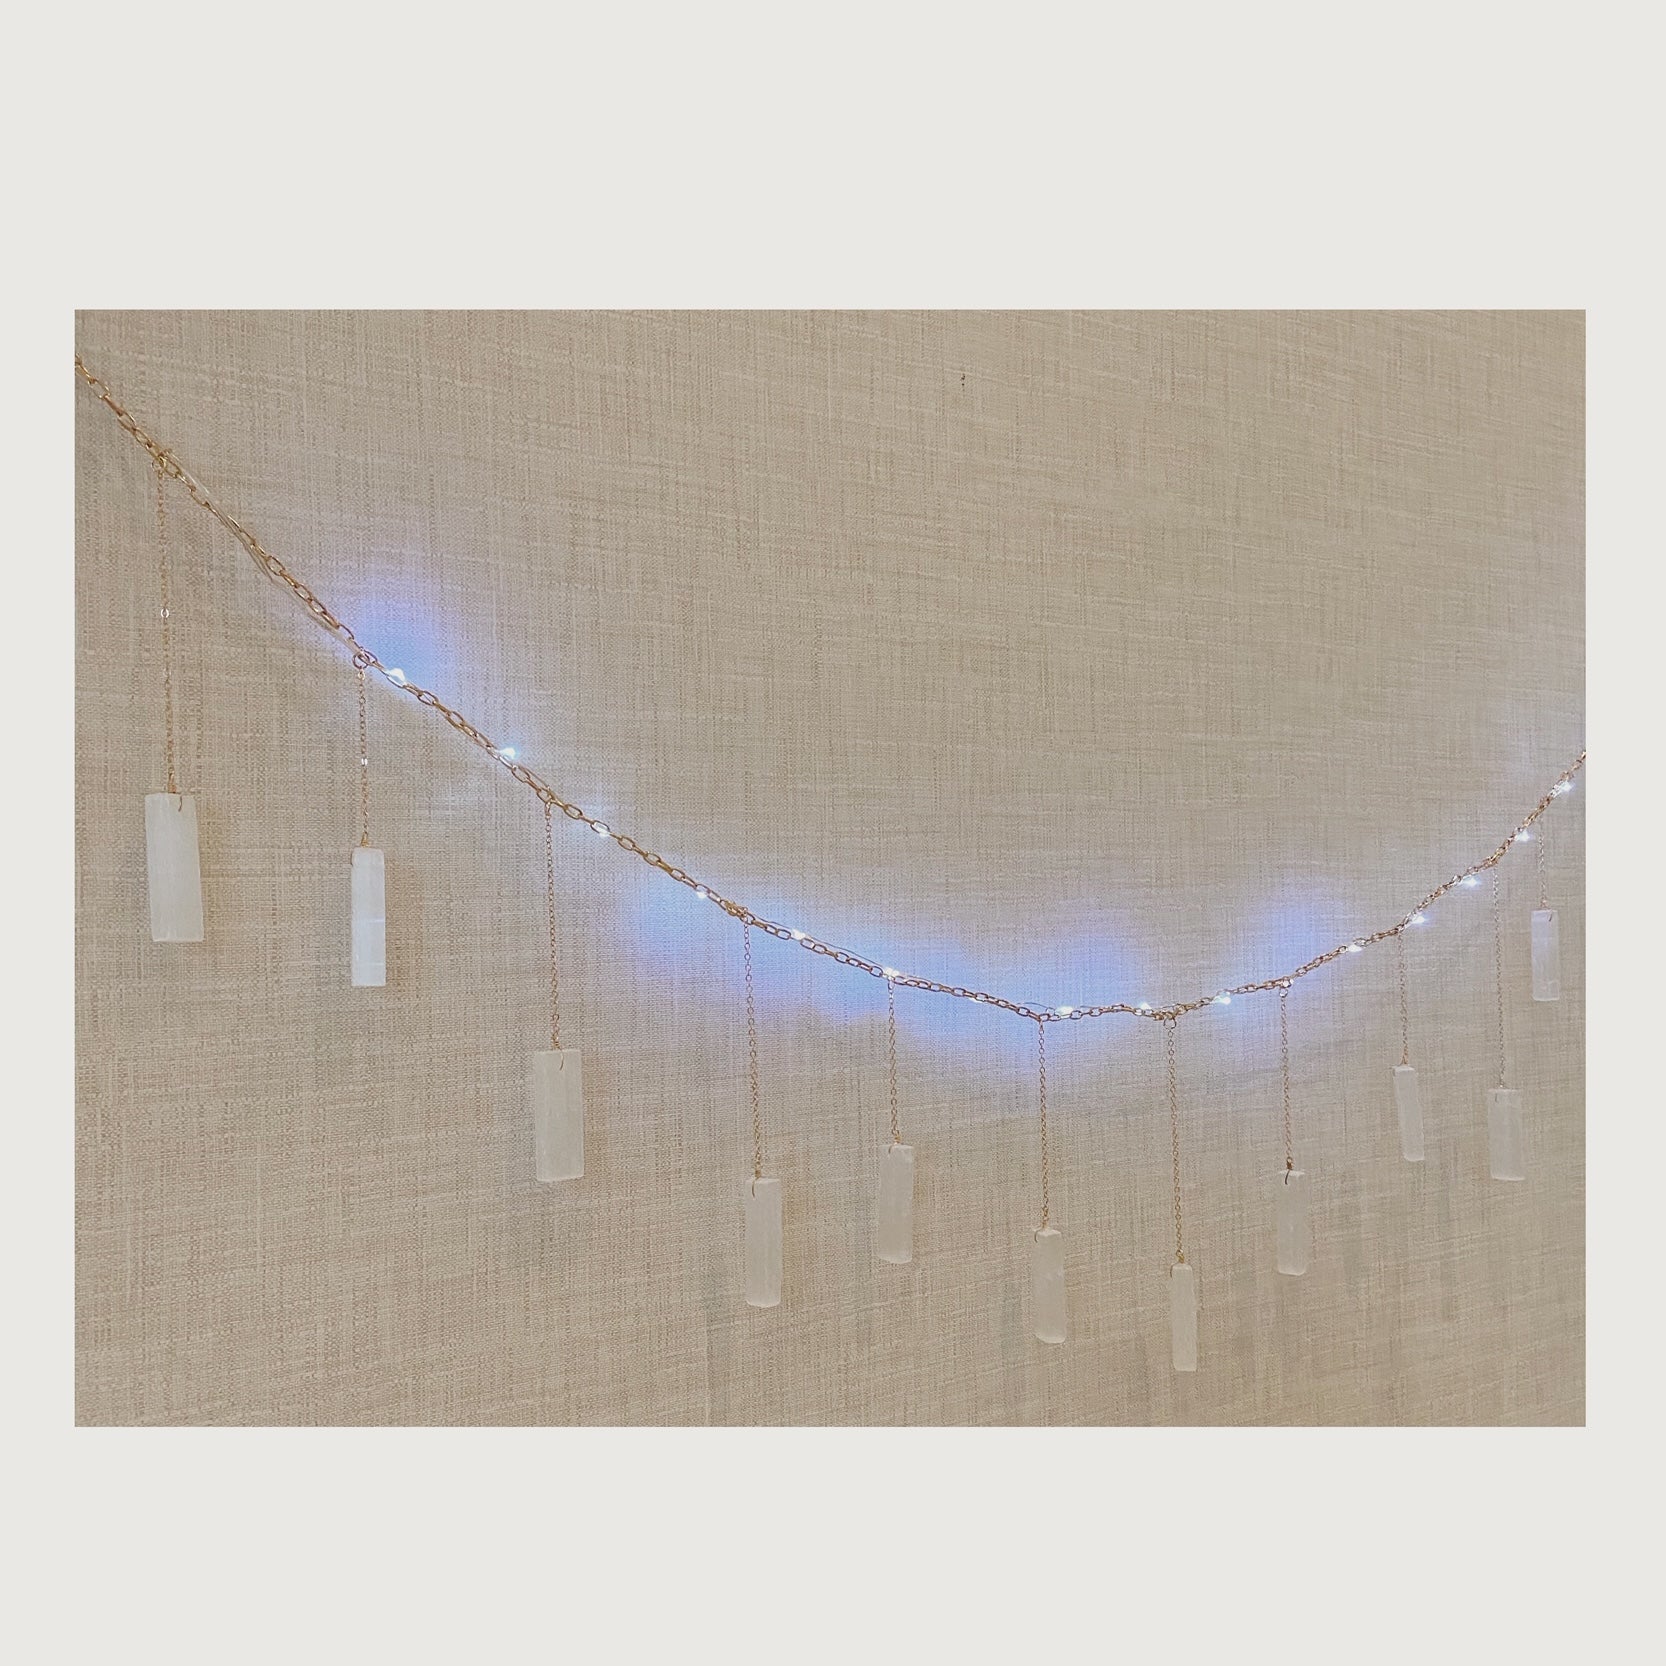 Selenite Garland with String Lighting - Ariana Ost